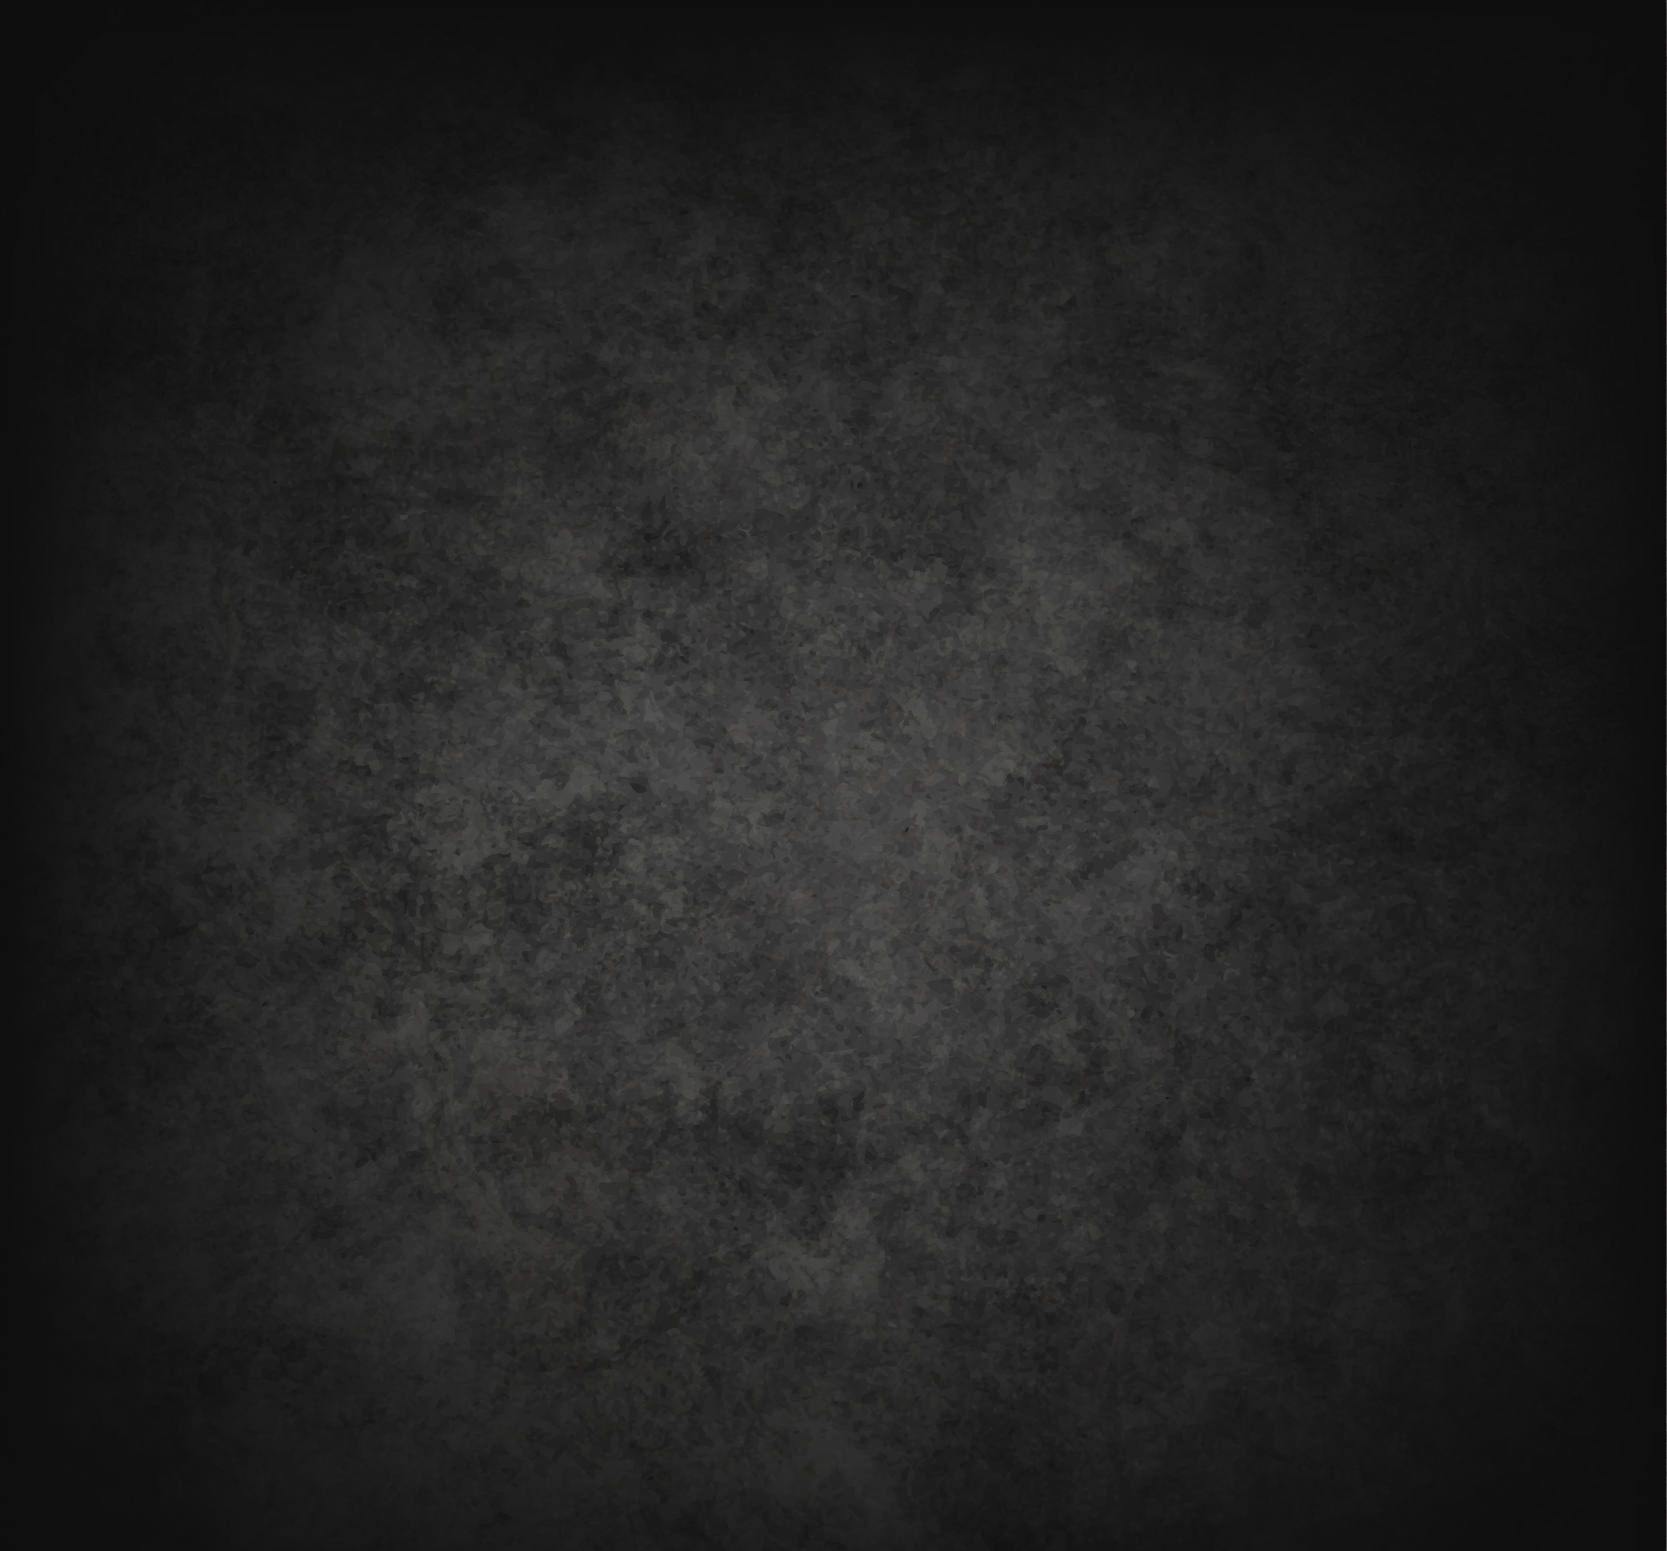 passport wallpaper,black,darkness,atmospheric phenomenon,text,grey